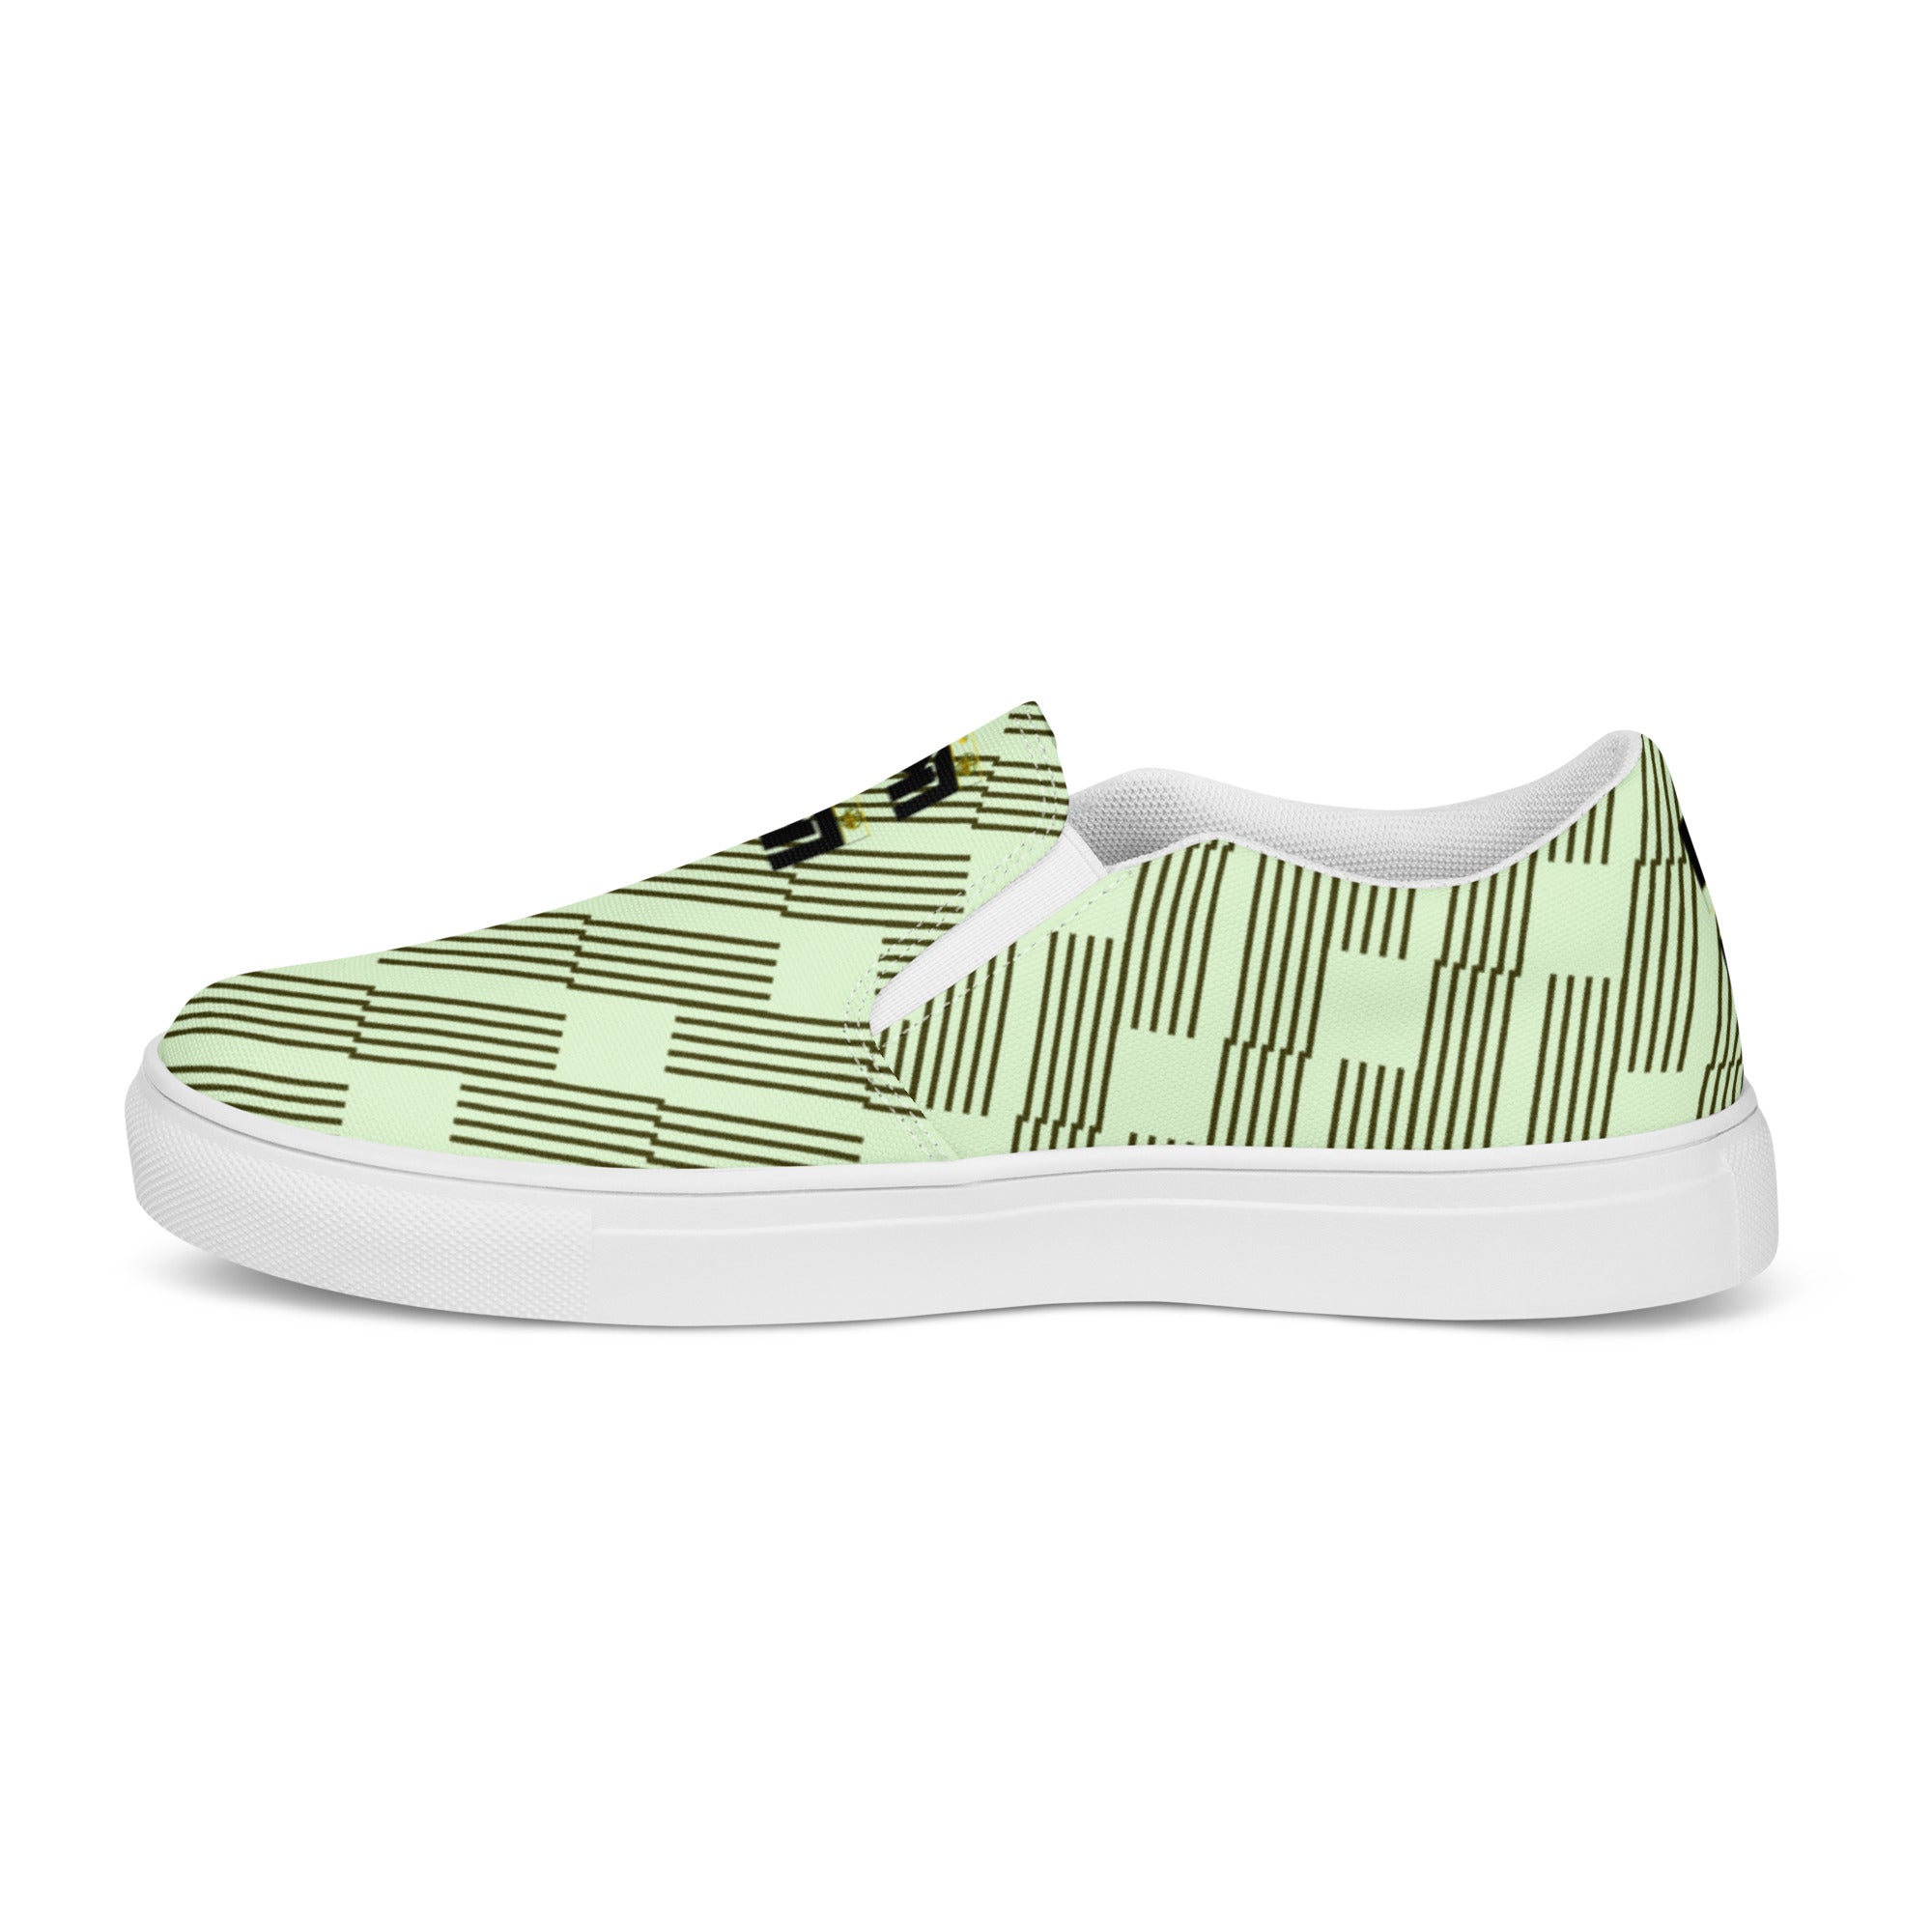 Men's slip-on green lkf9 shoes